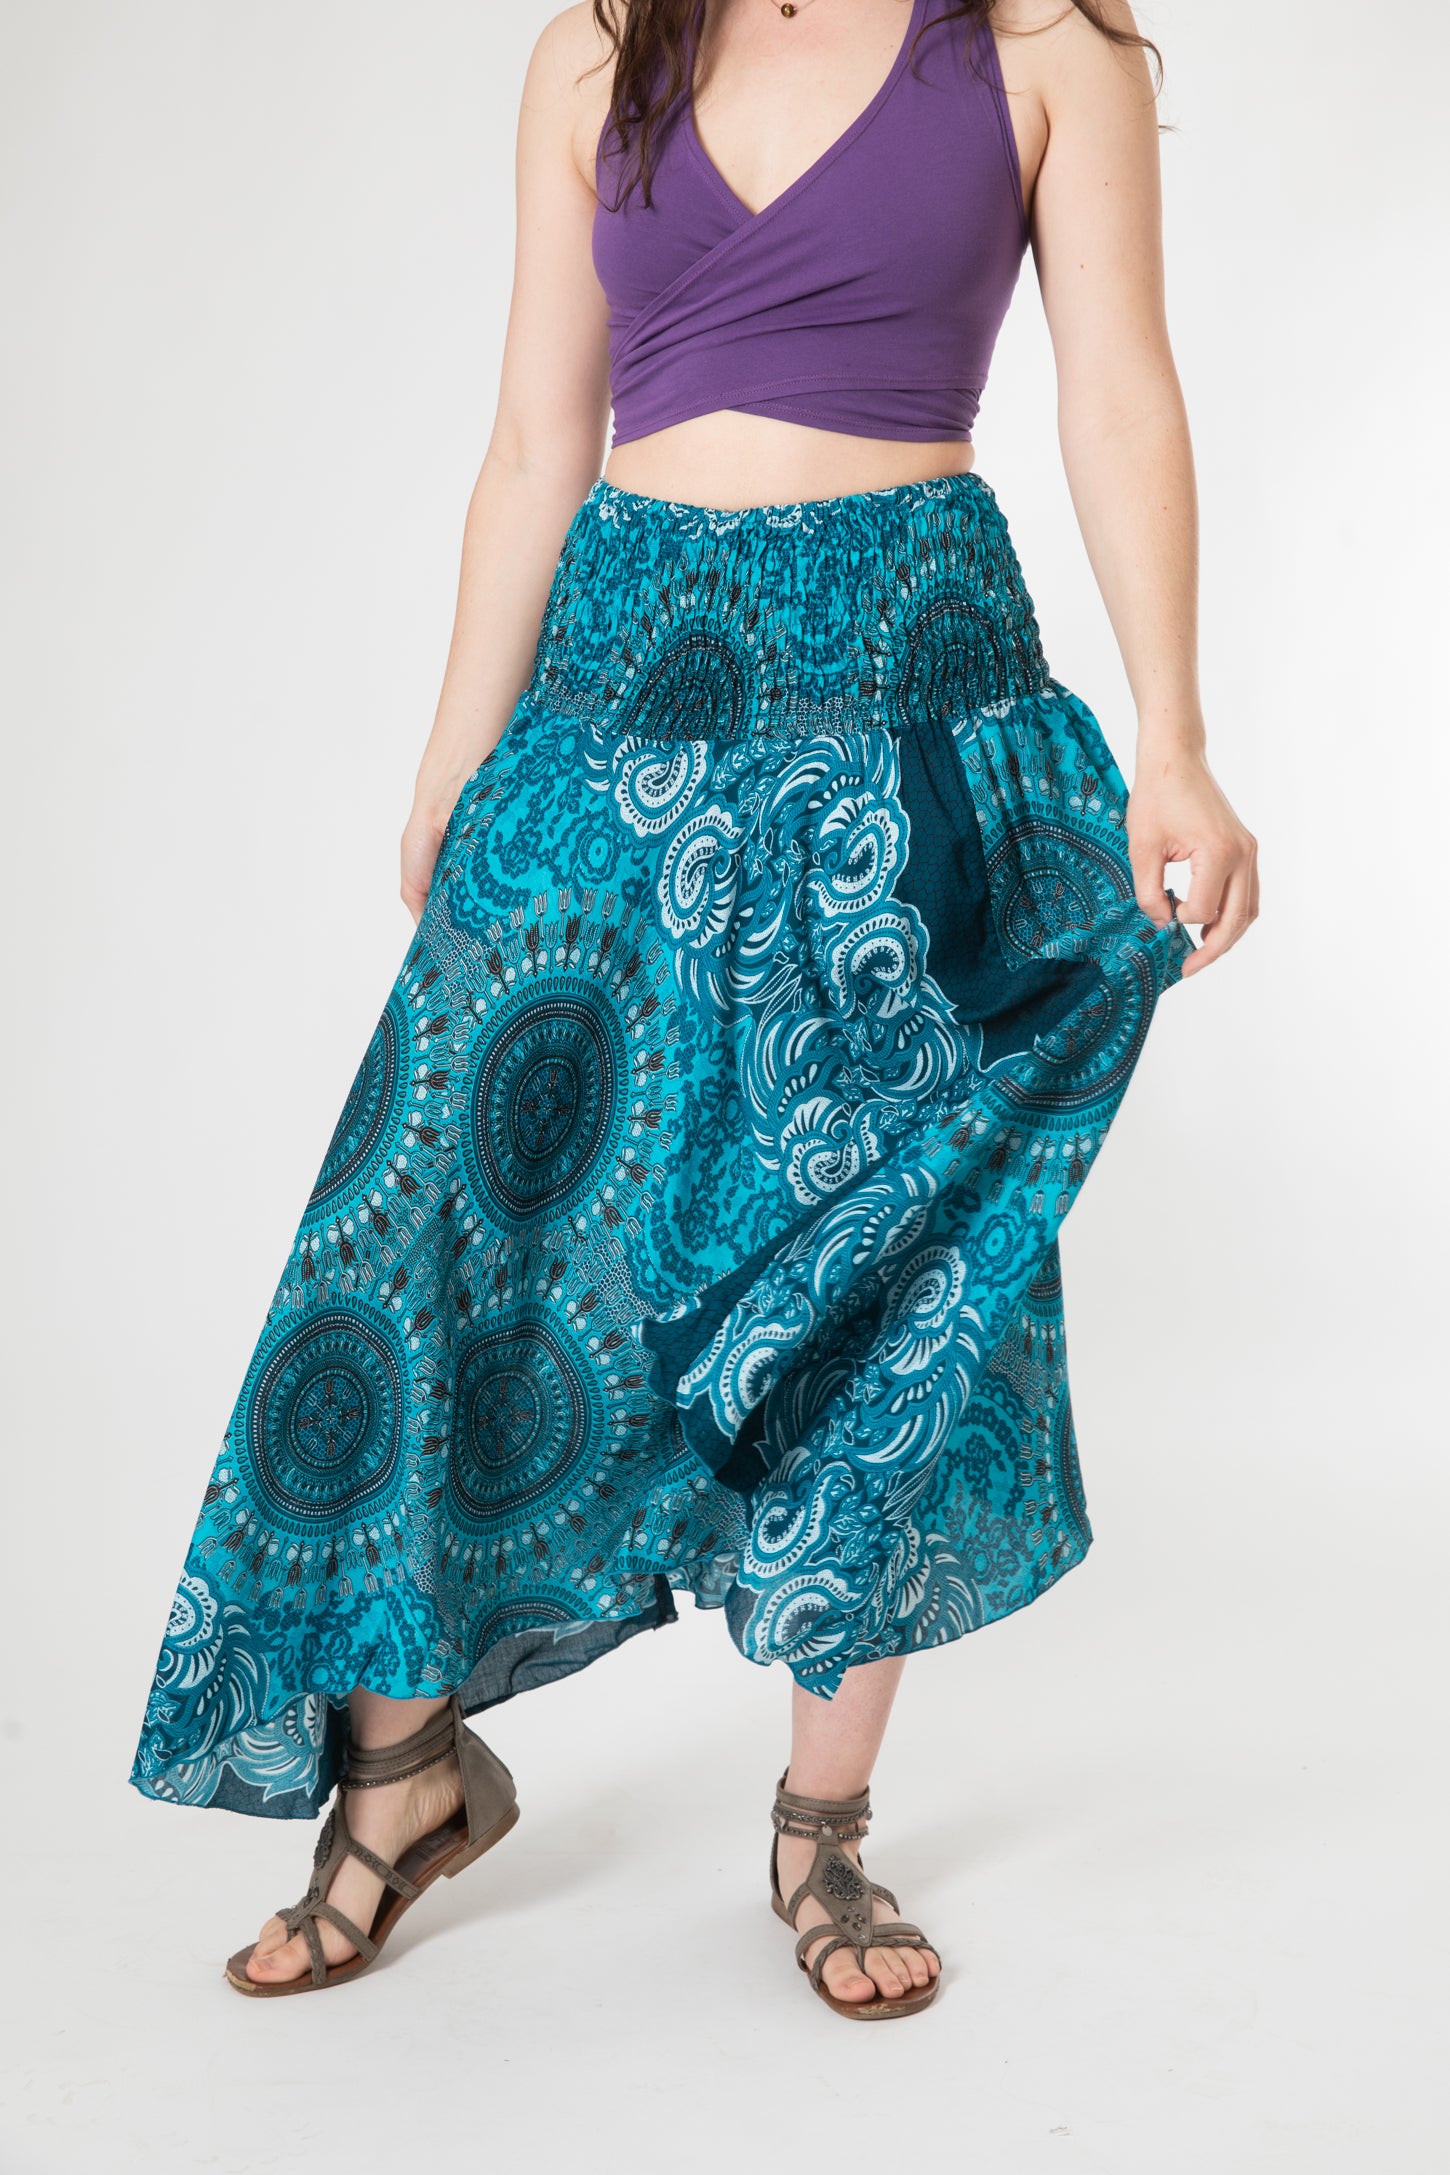 Mandala Convertible Skirt Top · Mexicali Blues